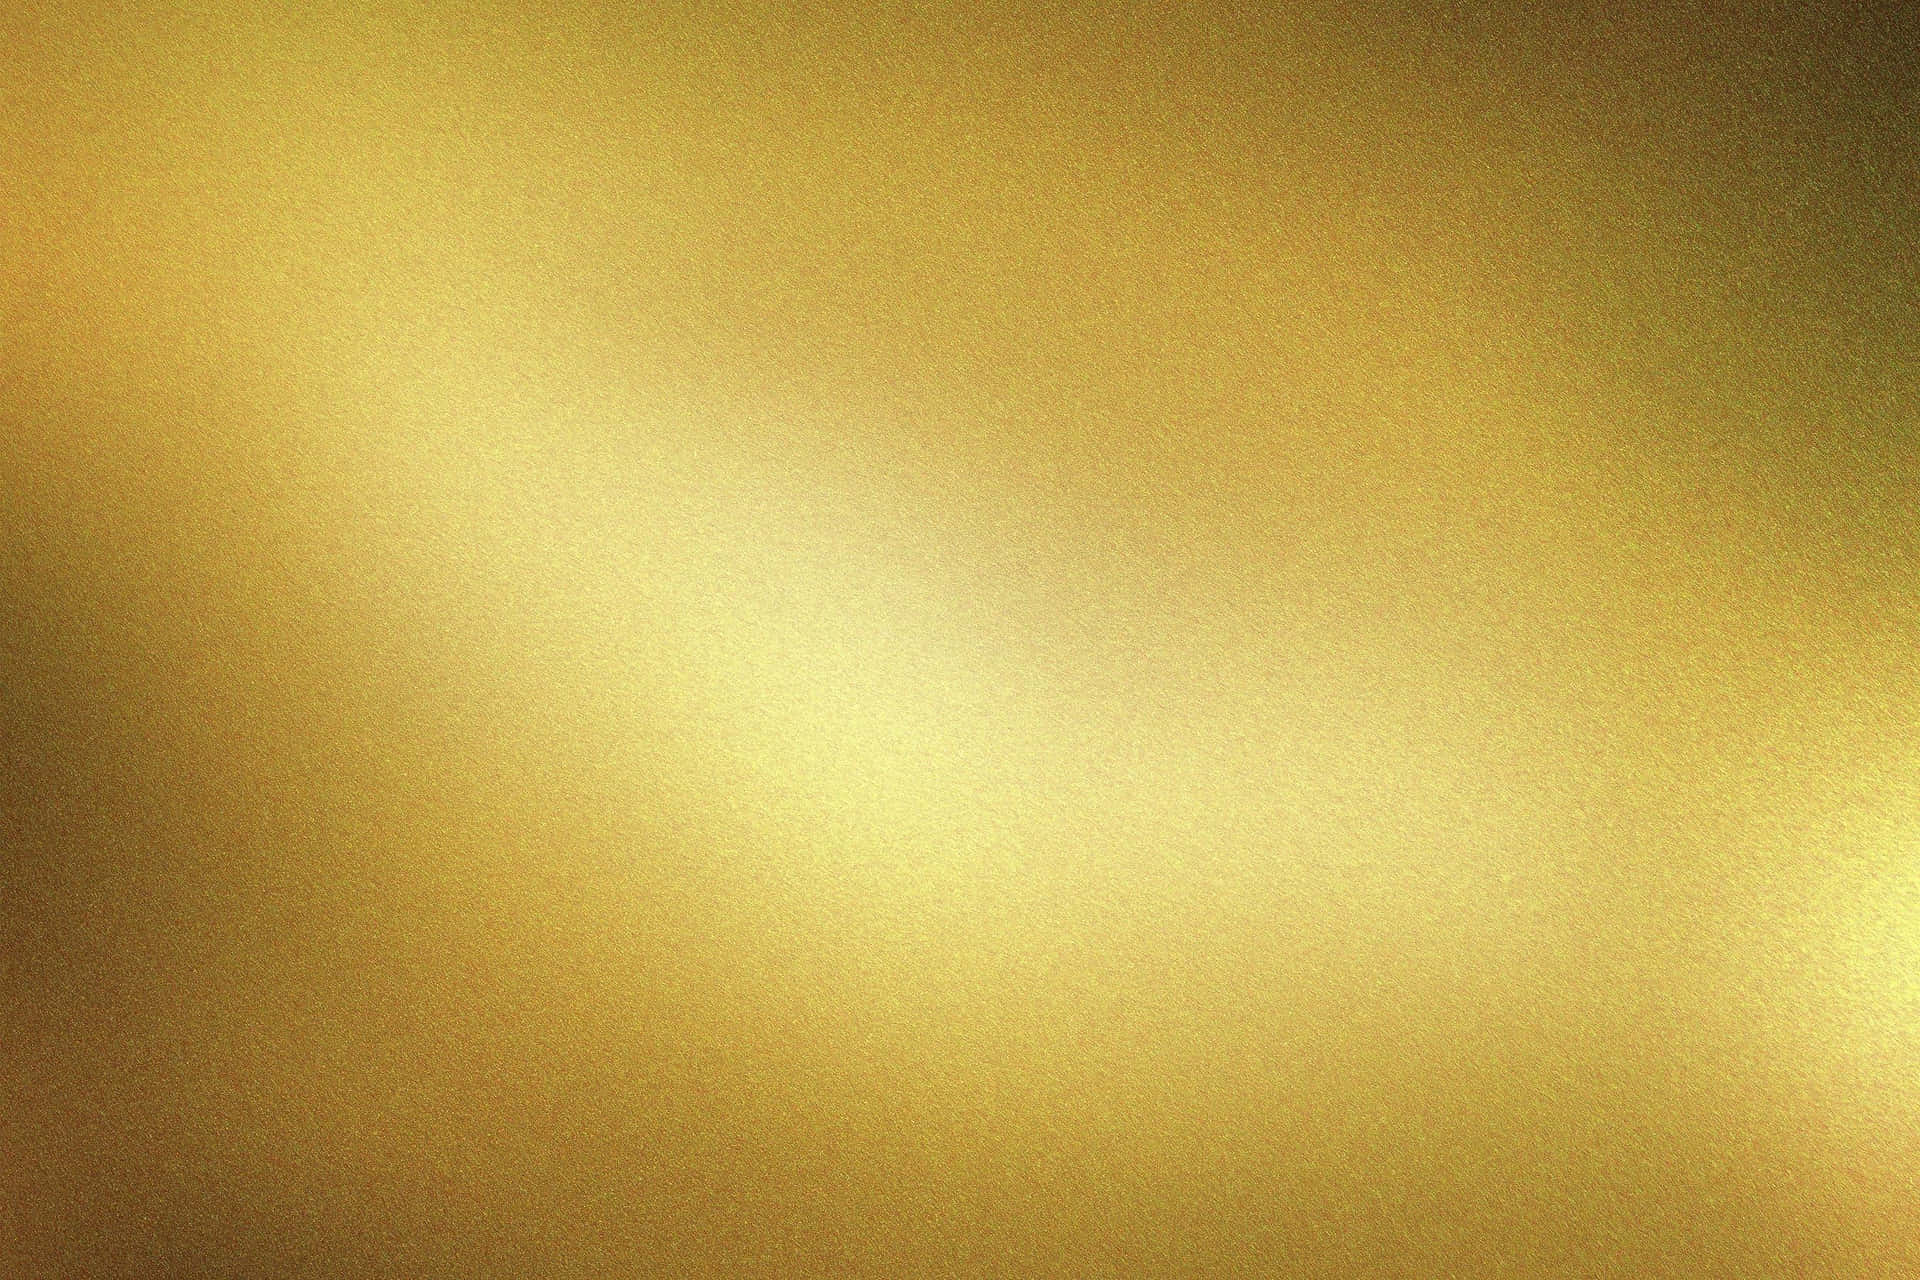 100+] High Resolution Gold Glitter Backgrounds